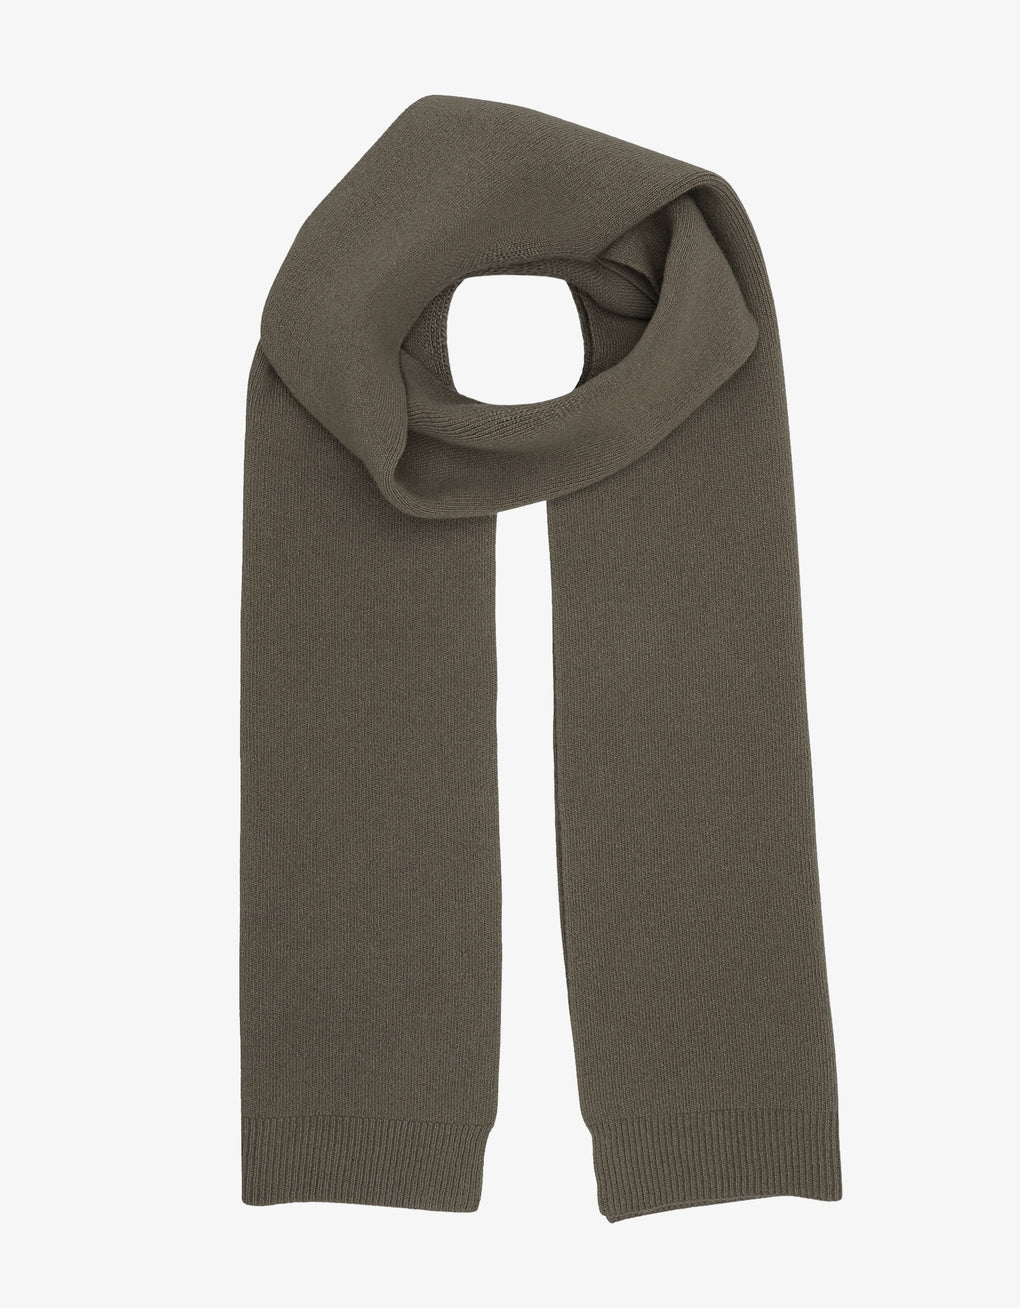 Merino wool scarf - dusty olive